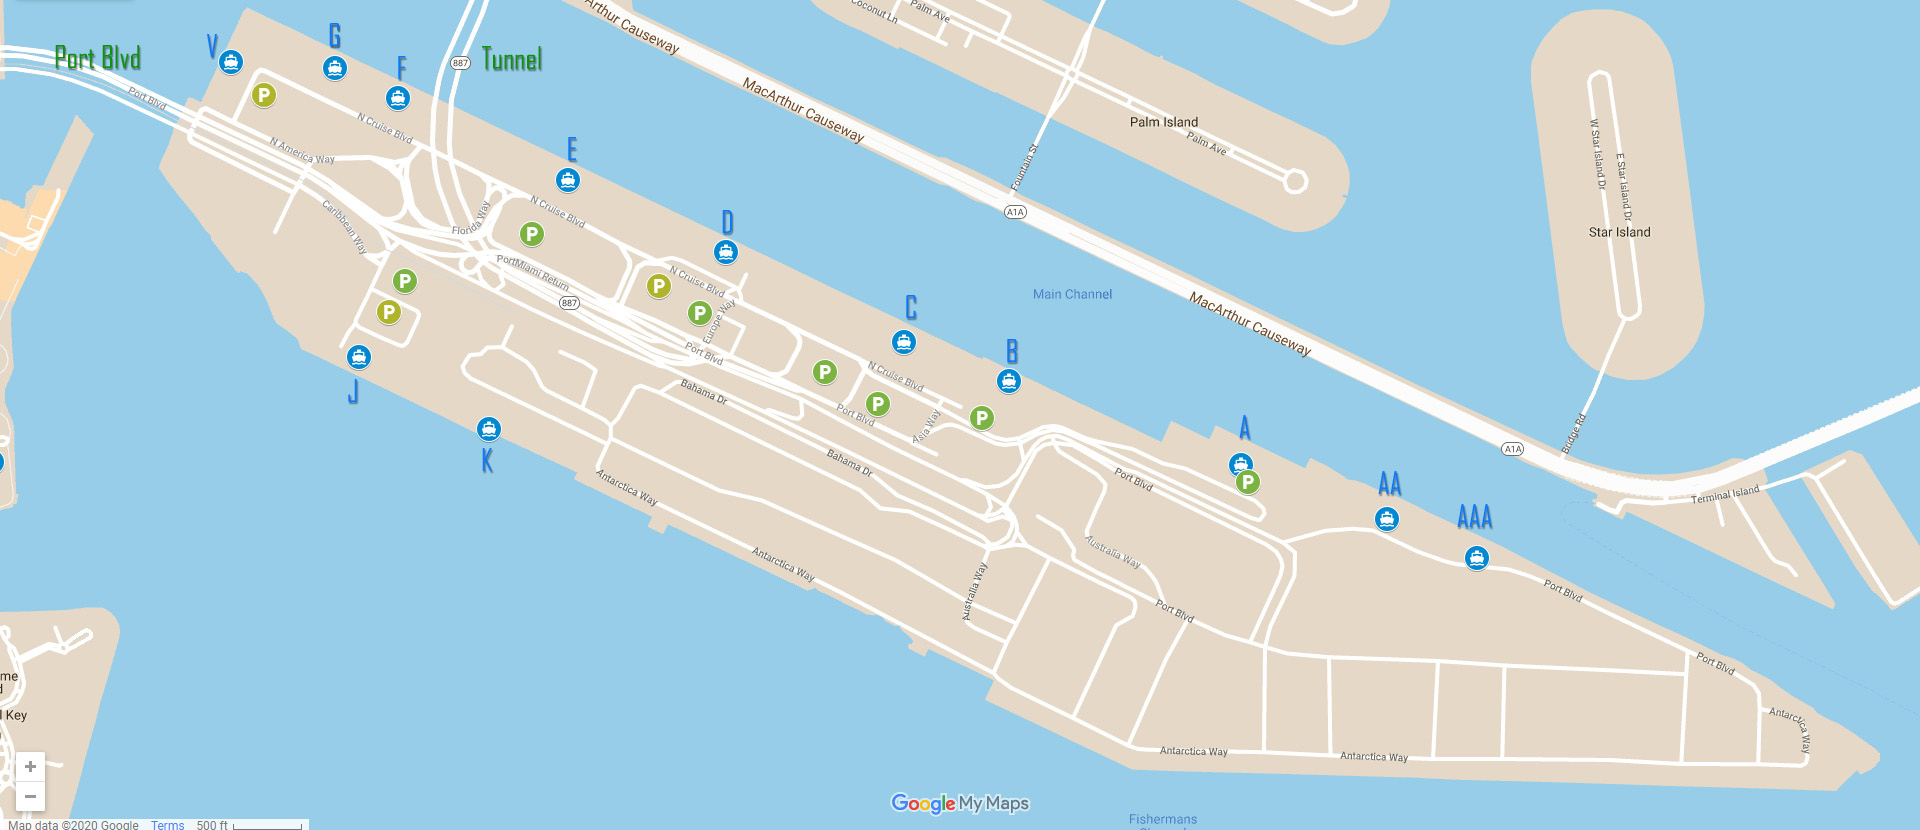 PortMiami Terminals And Parking Map 